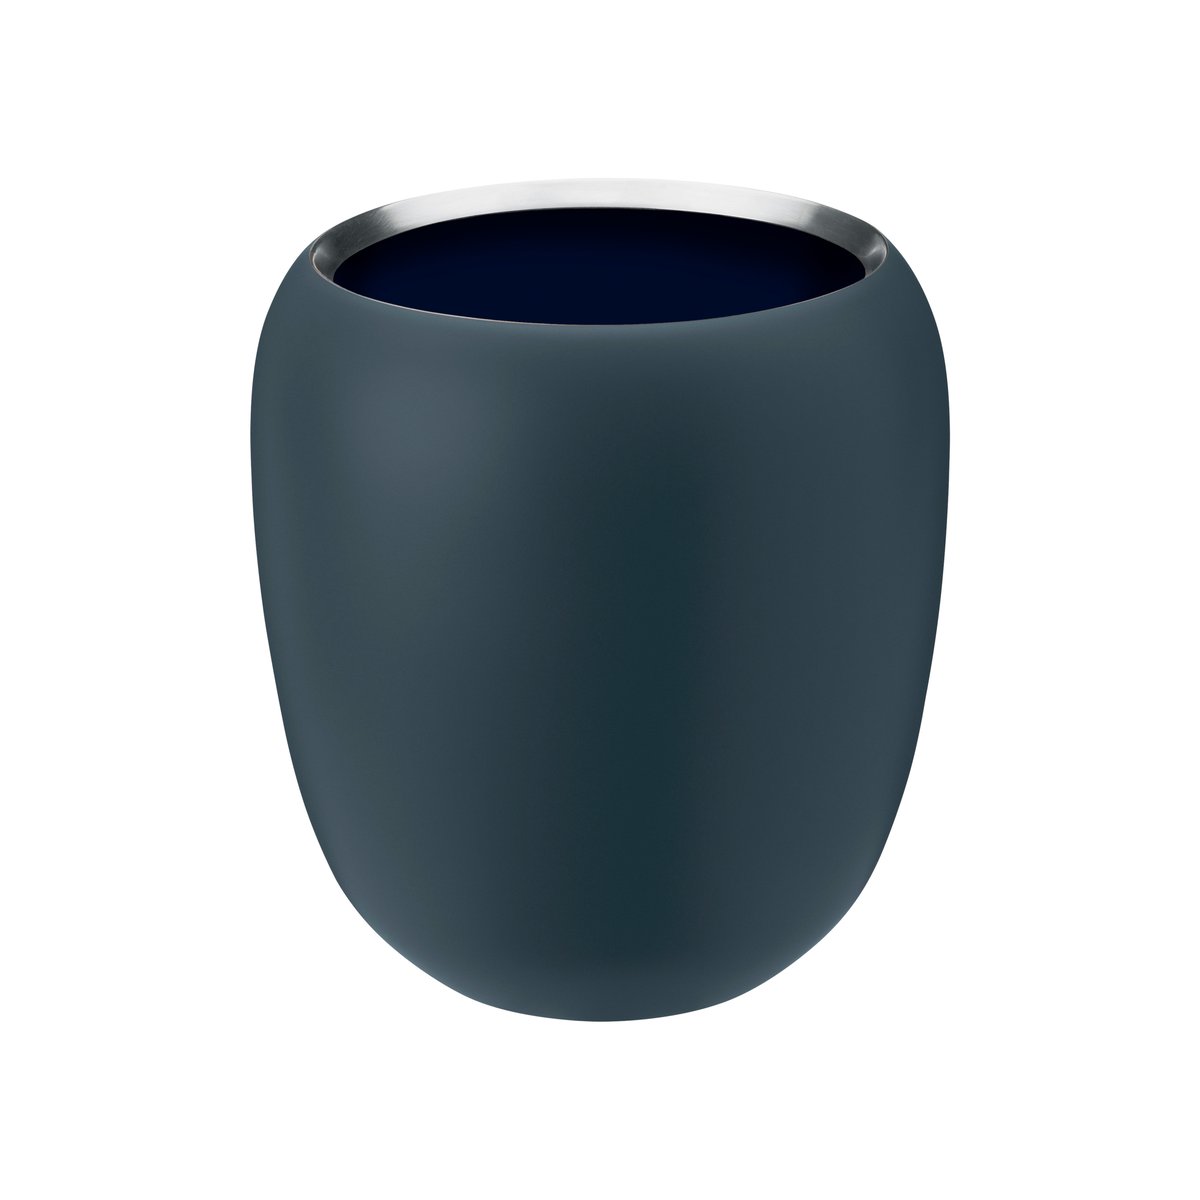 Stelton Ora vase 17 cm Dusty blue/Midnight blue